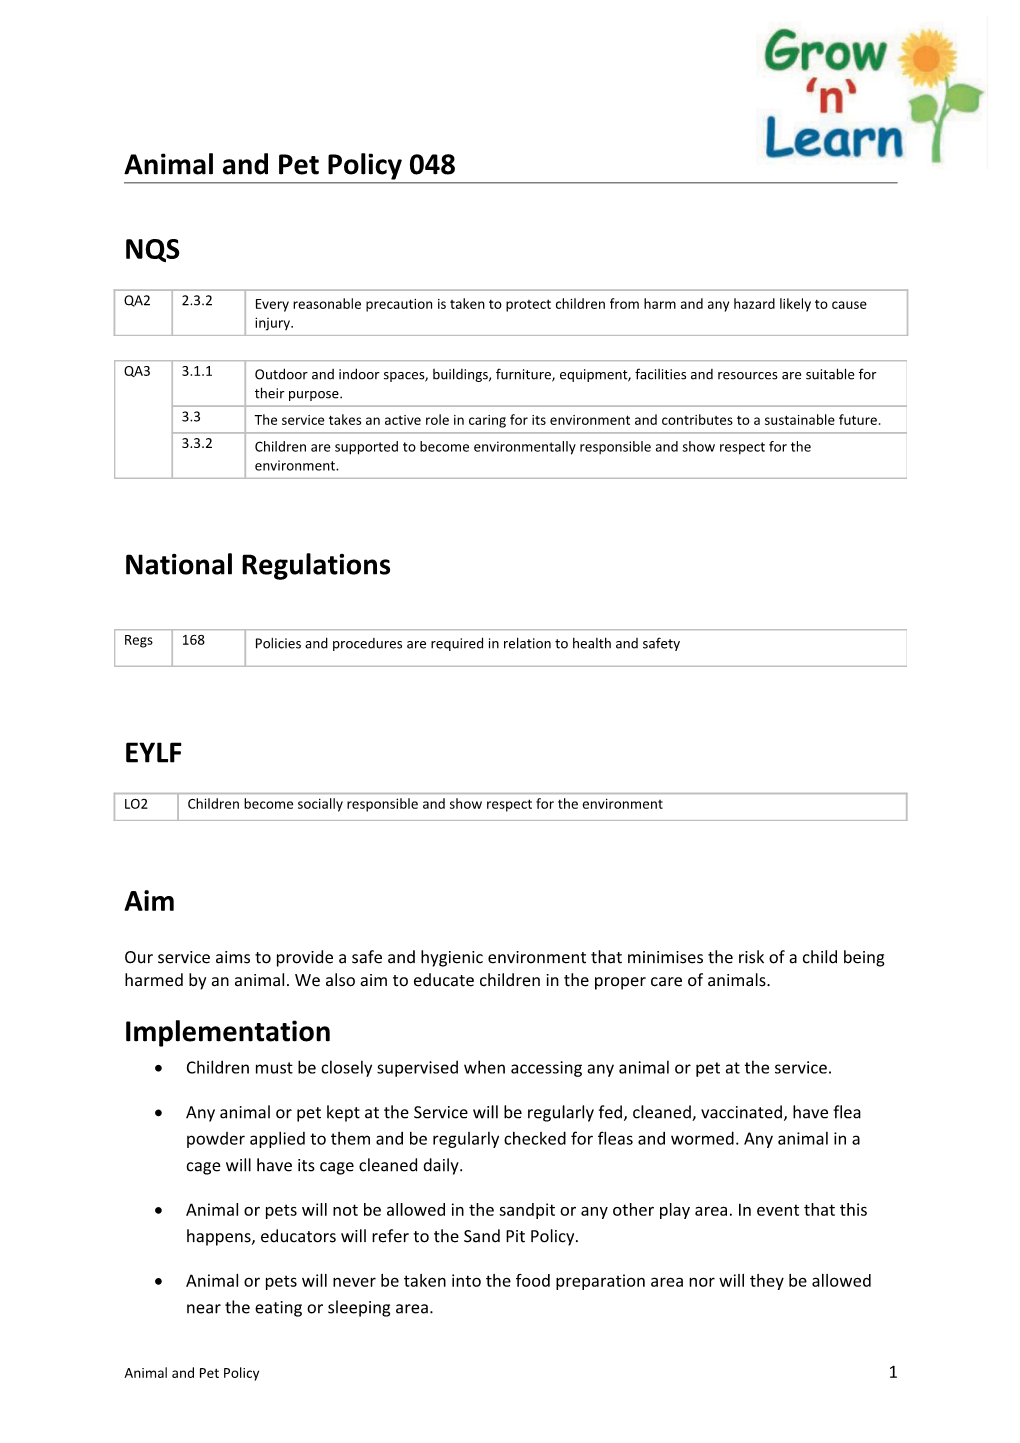 National Regulations s1